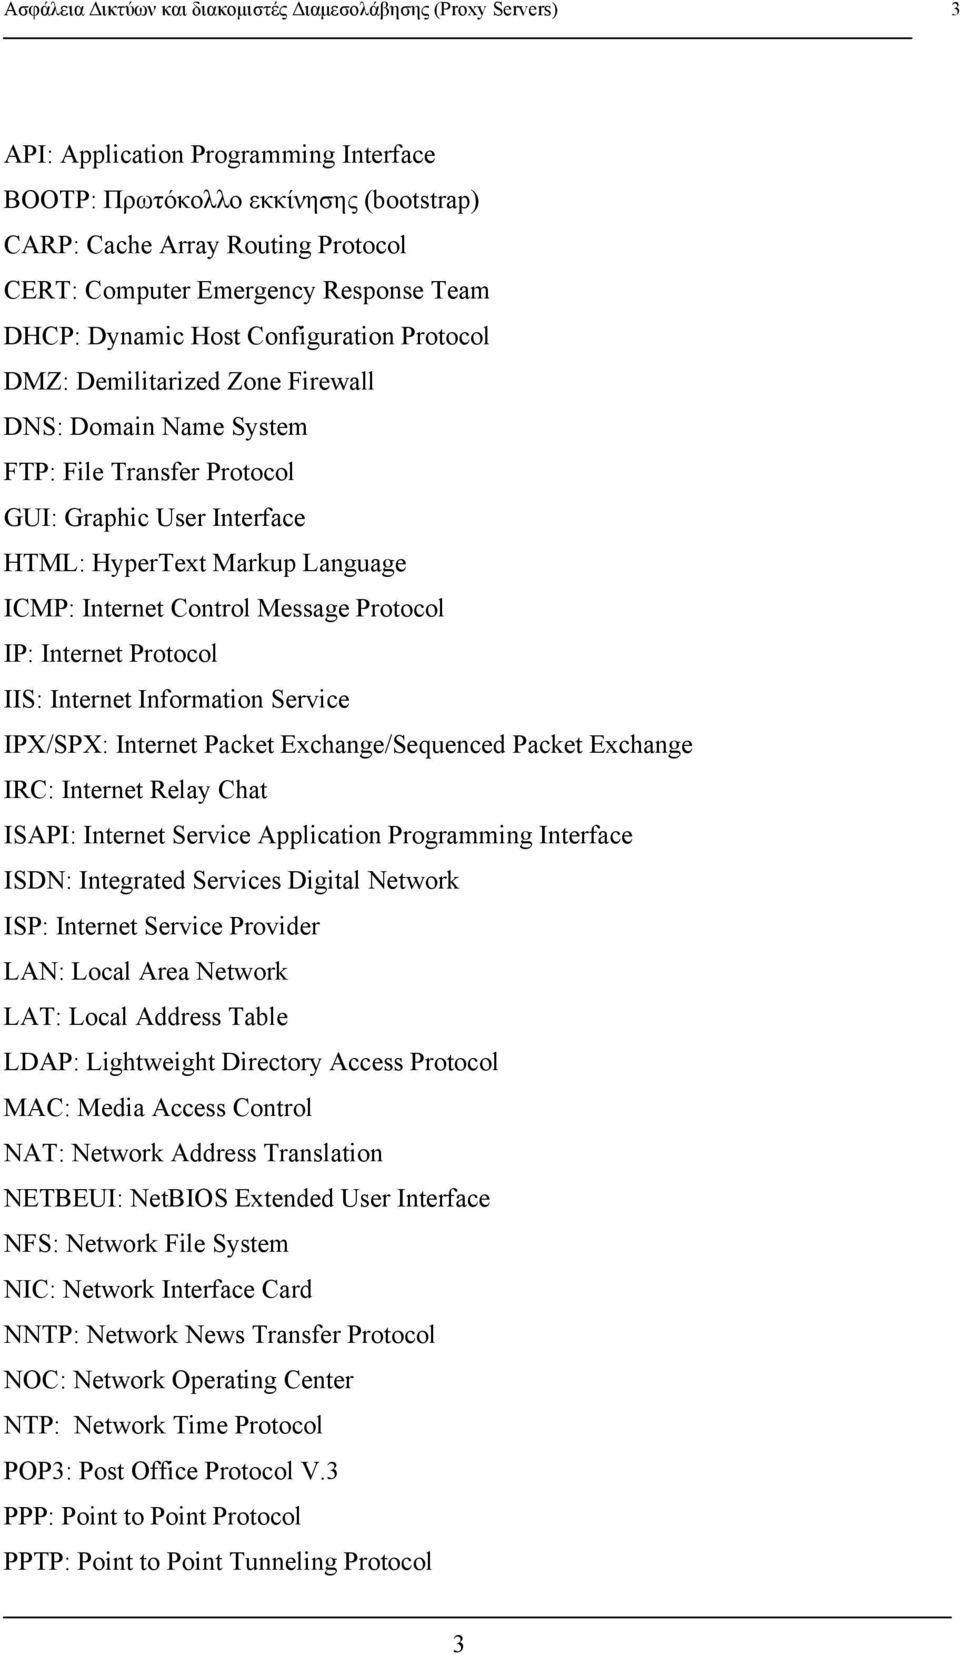 Markup Language ICMP: Internet Control Message Protocol IP: Internet Protocol IIS: Internet Information Service IPX/SPX: Internet Packet Exchange/Sequenced Packet Exchange IRC: Internet Relay Chat